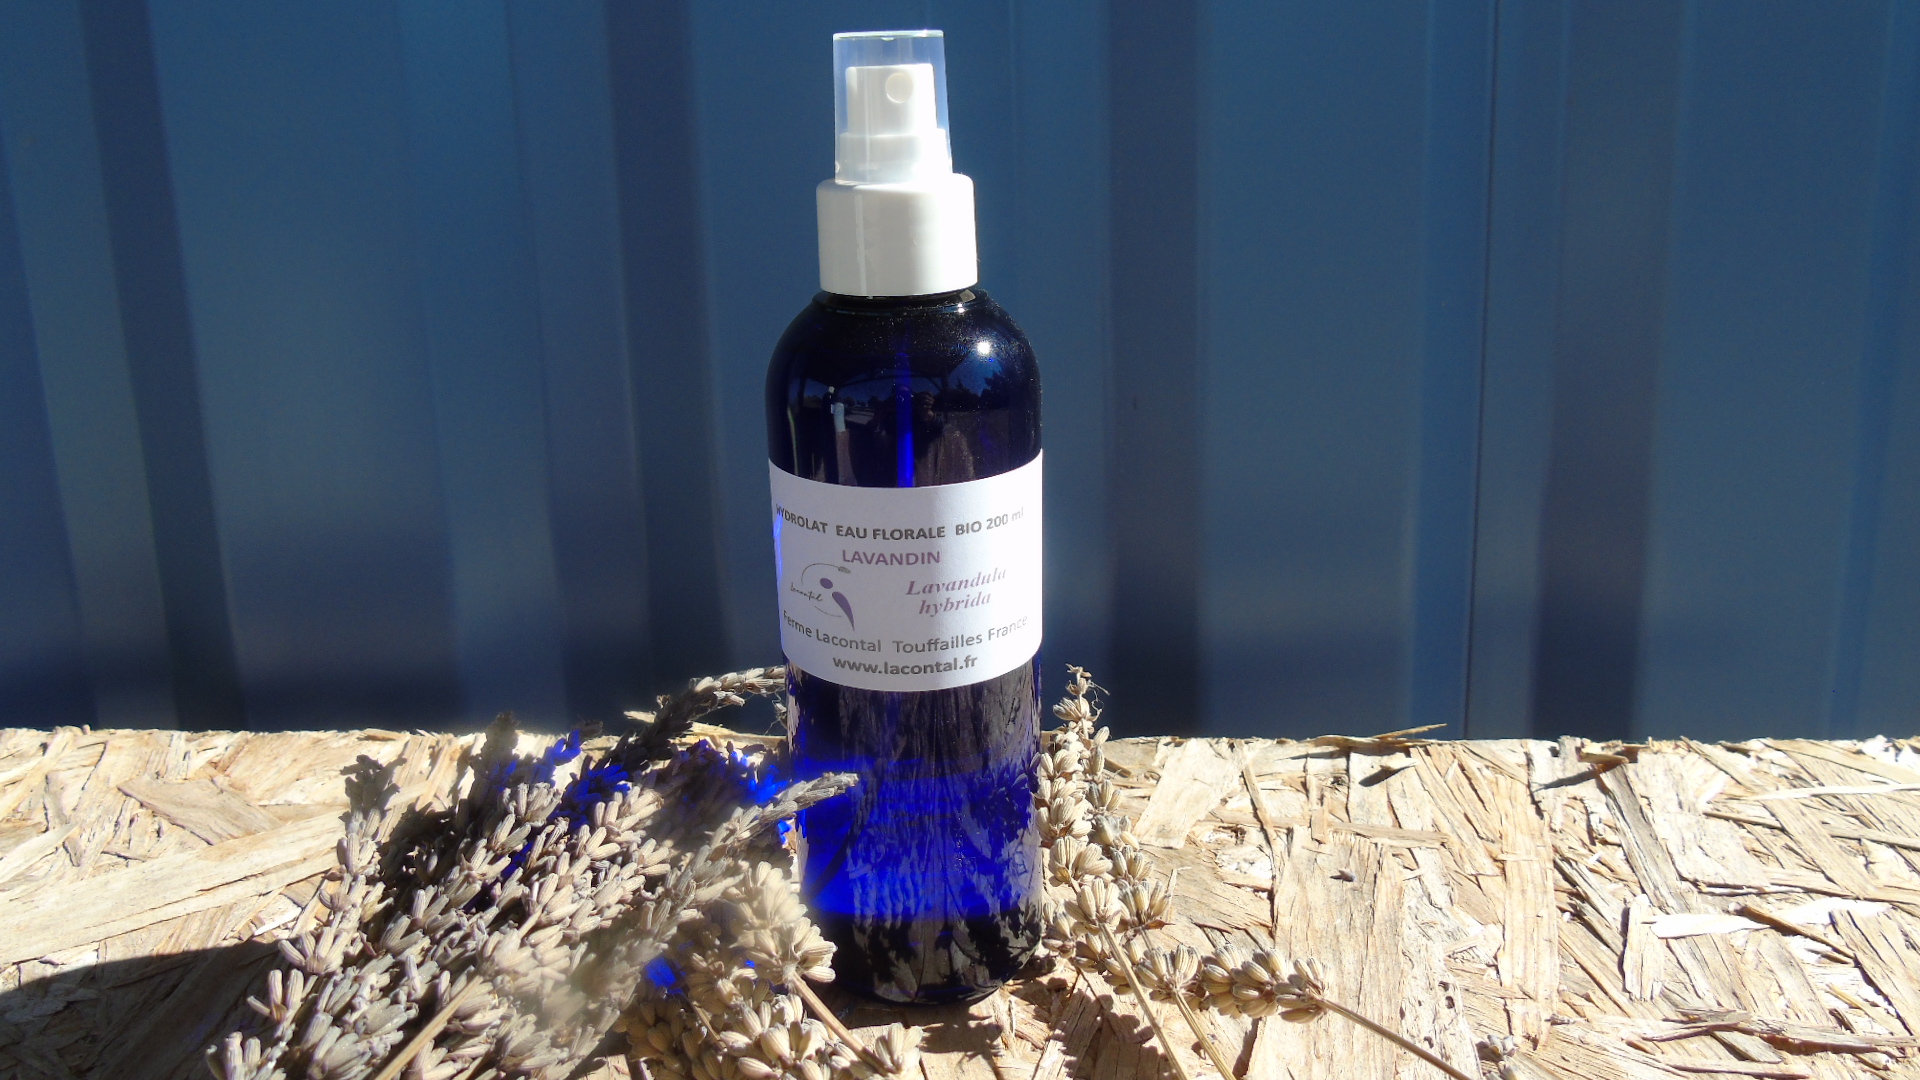 Lavandin - Hydrolat organic 200 ml Spray